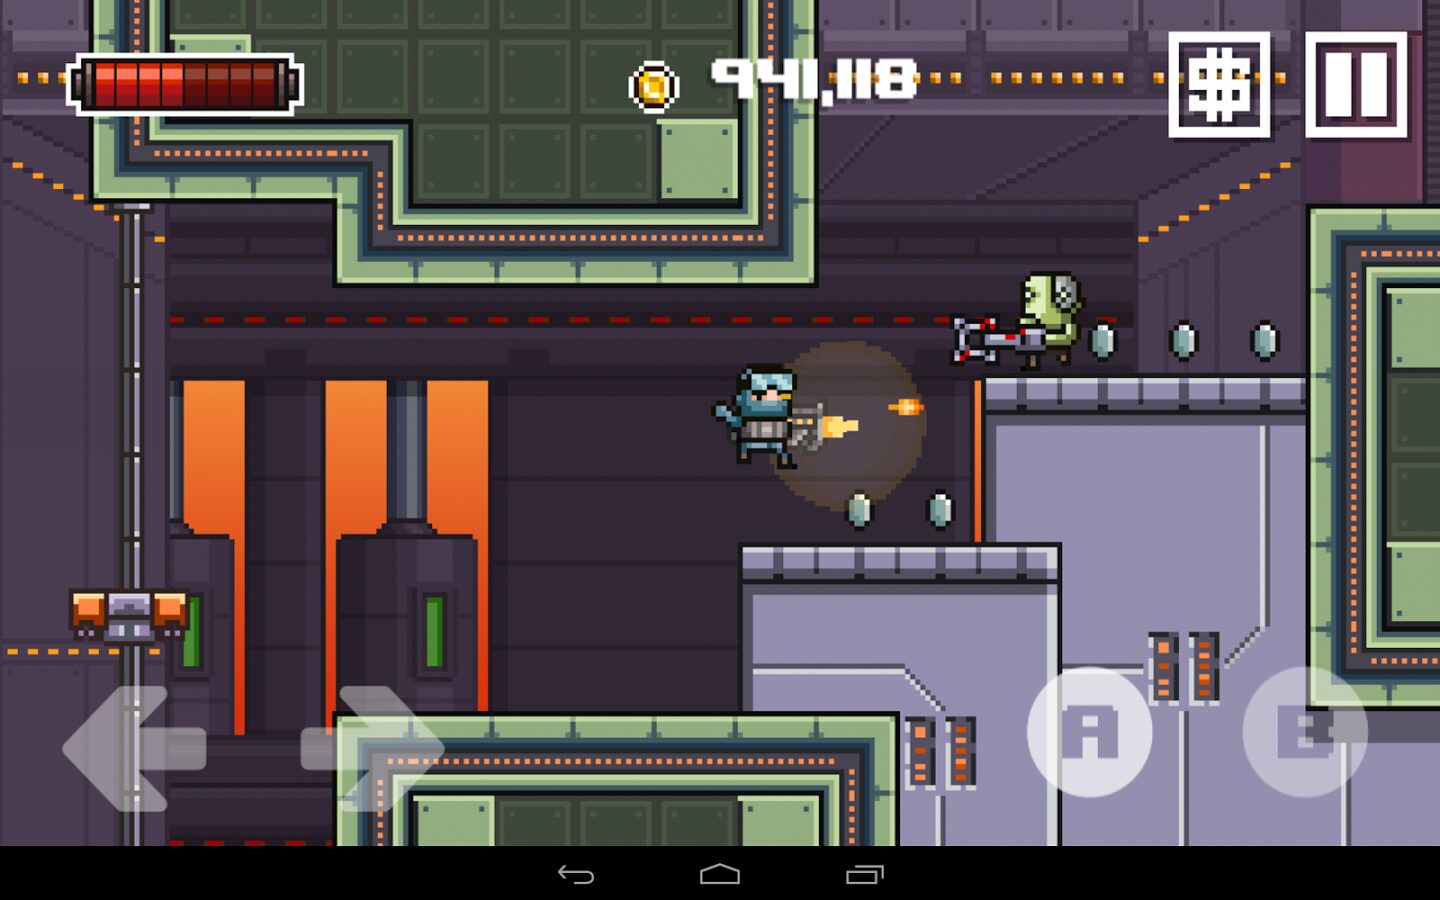 Derniers Jeux Android : Random Heroes 2, Defenders, iON Bond, … Jeux Android